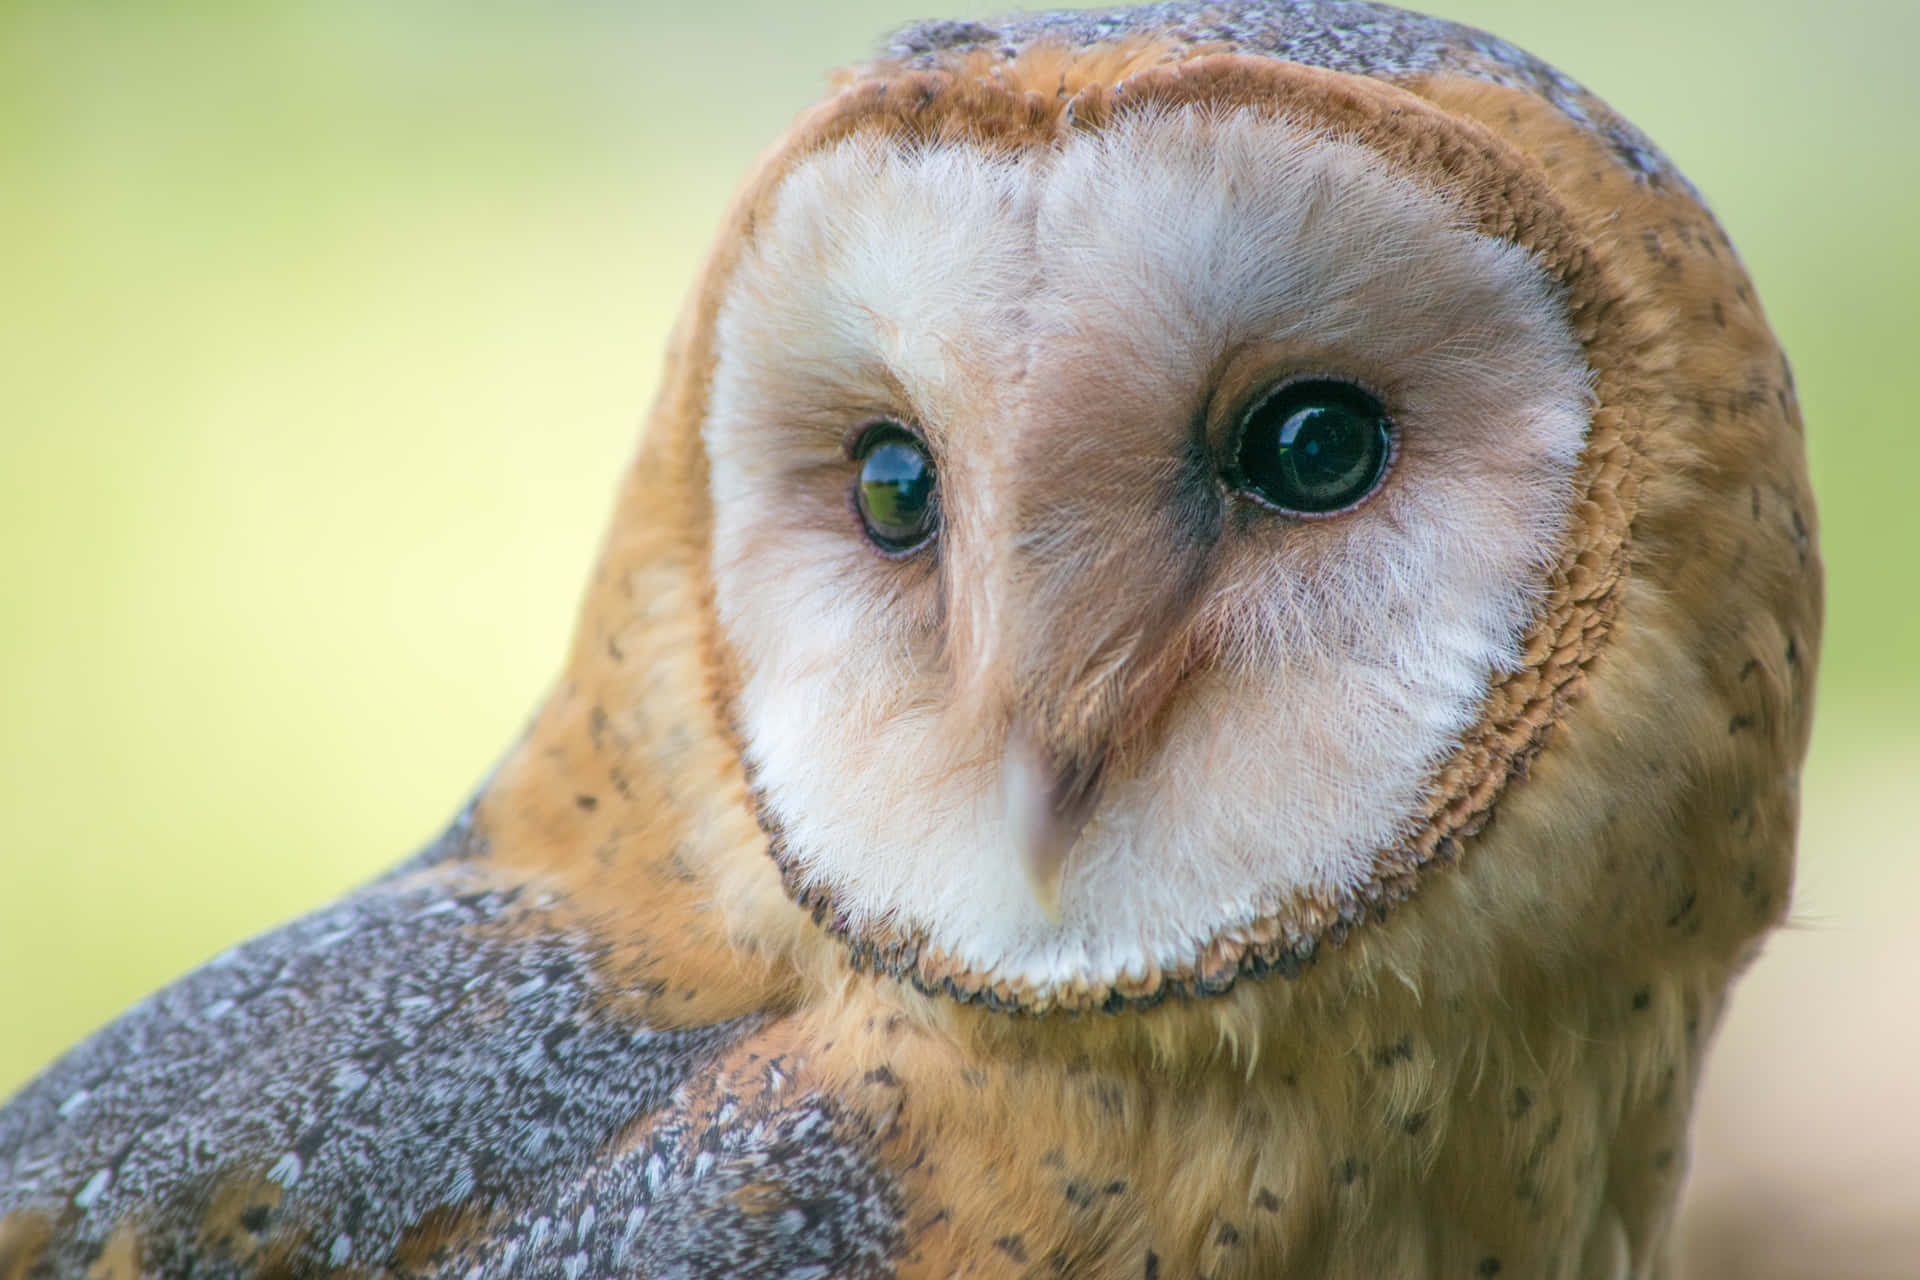 A beautiful Barn Owl in its natural habitat